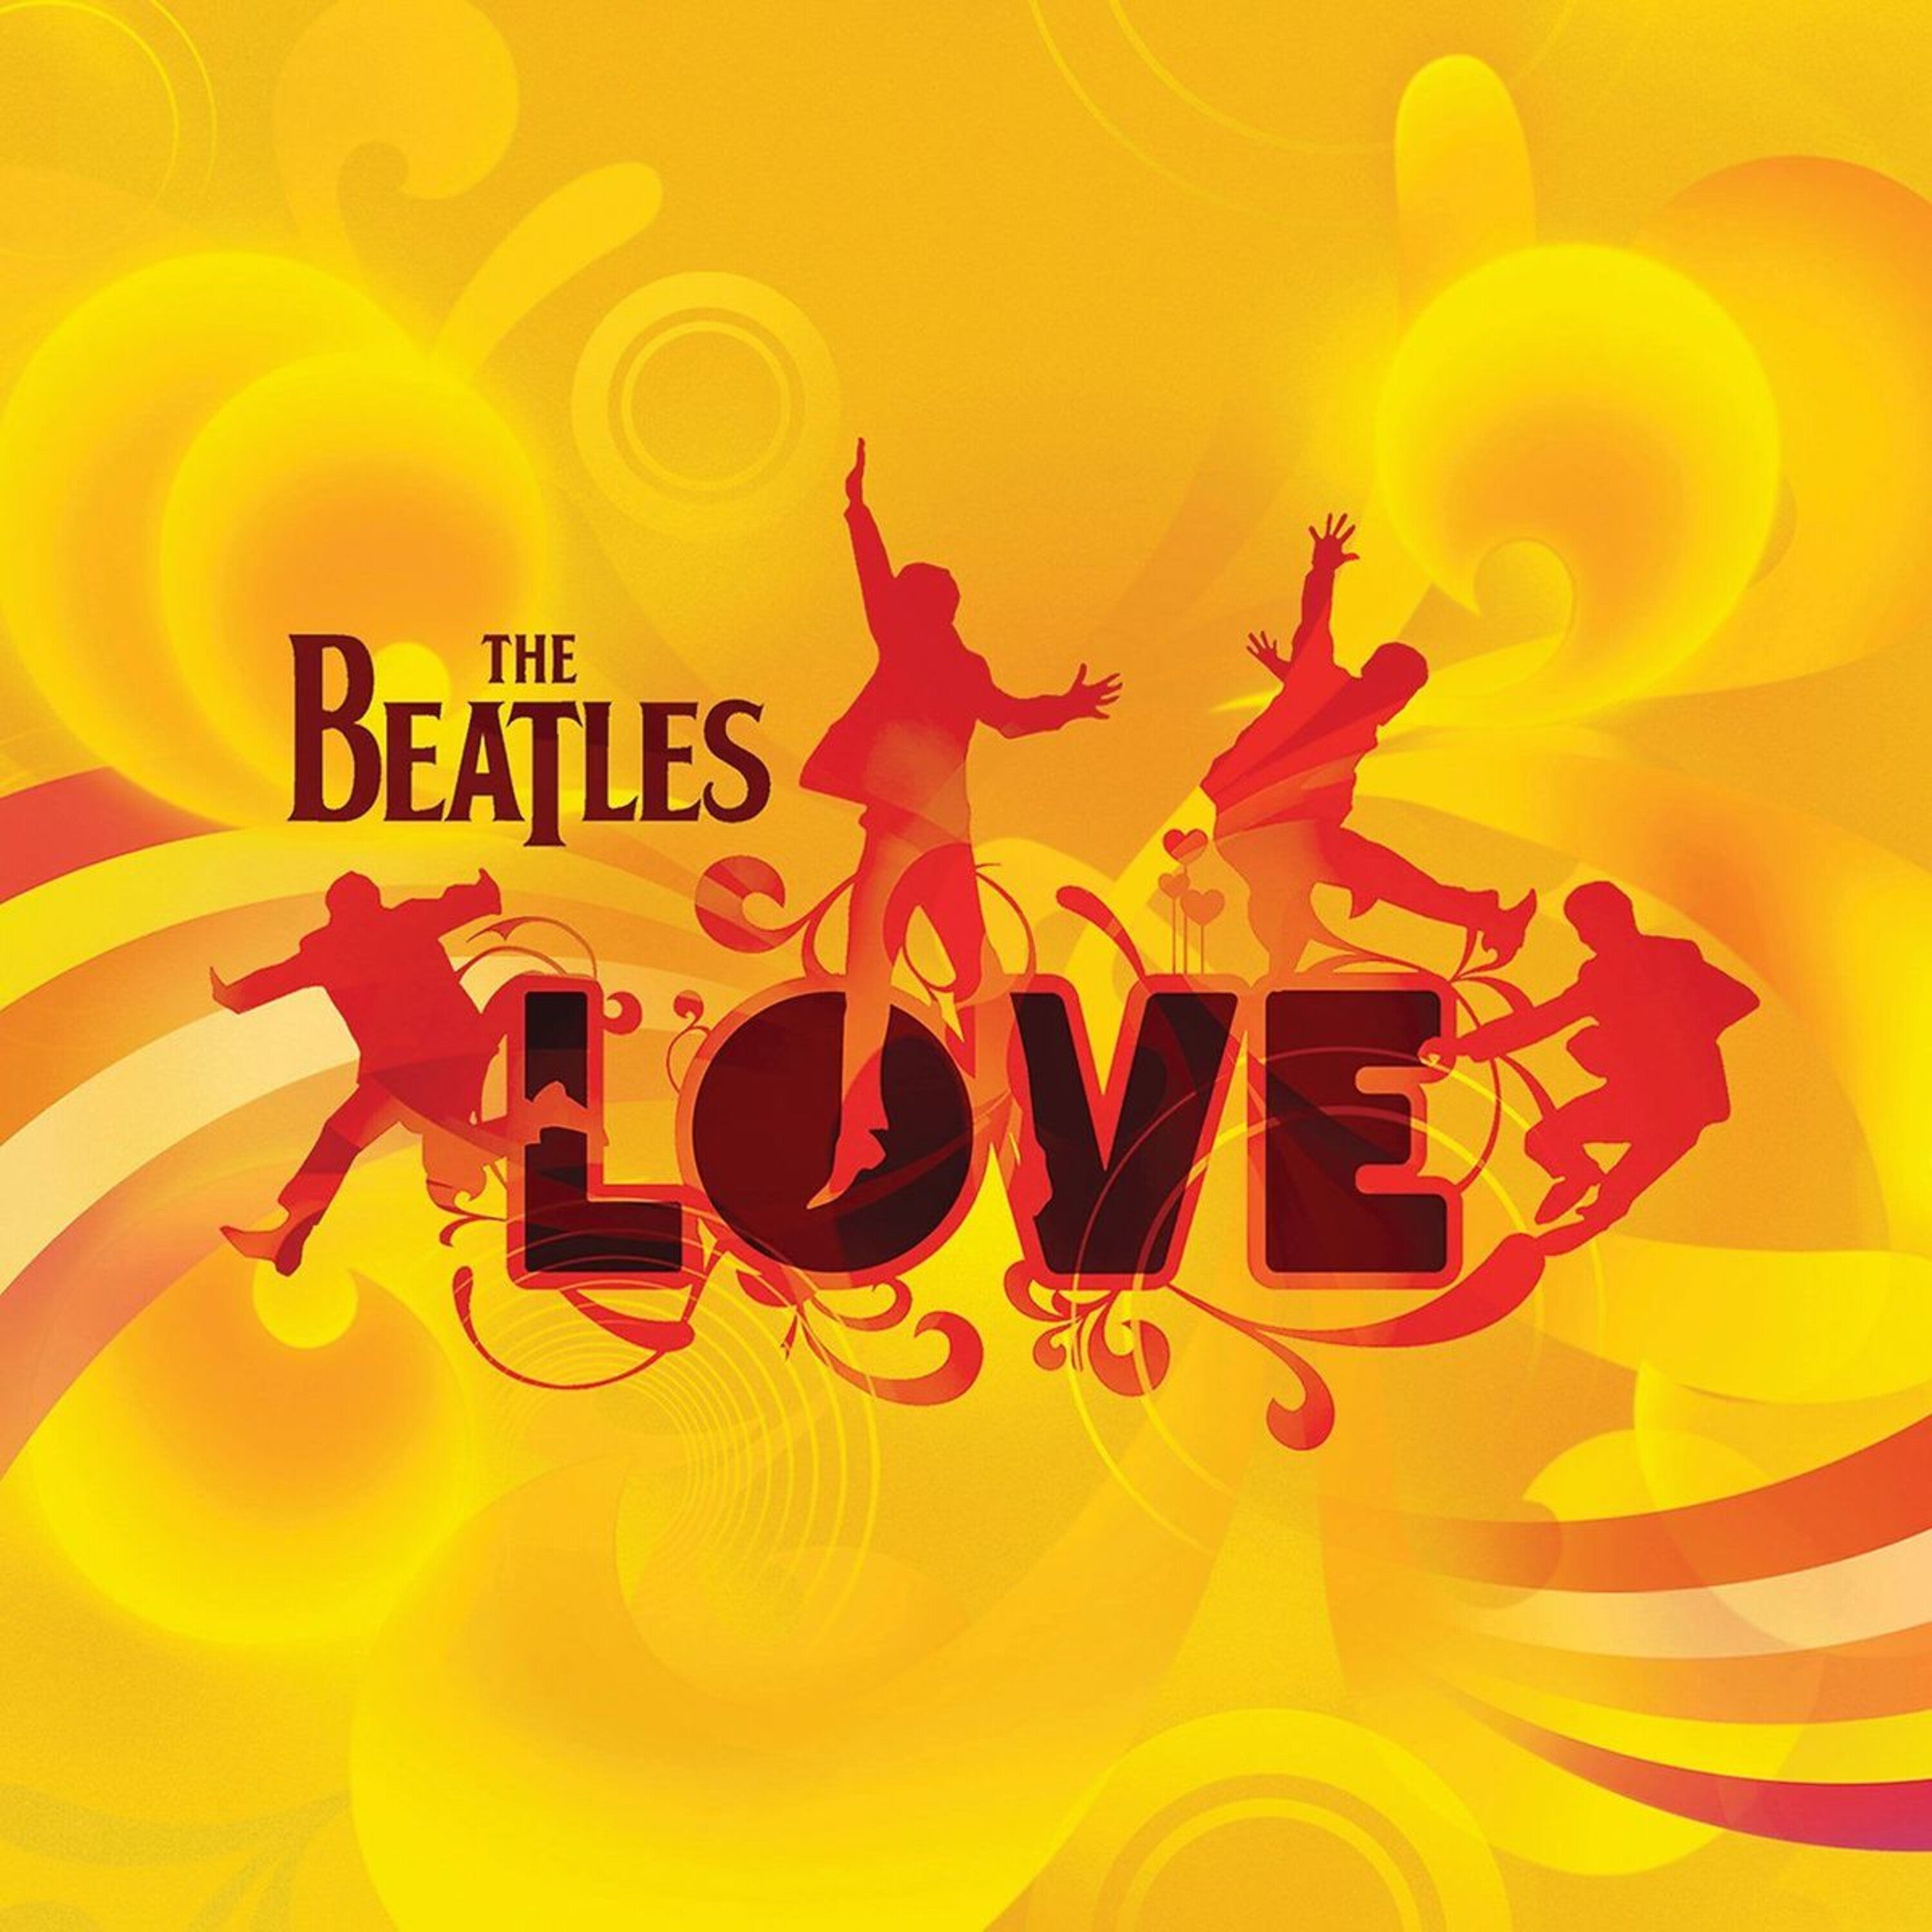 https://images.bravado.de/prod/product-assets/product-asset-data/beatles-the/the-beatles-domestic/products/142366/web/309005/image-thumb__309005__3000x3000_original/The-Beatles-Love-Vinyl-142366-309005.jpg